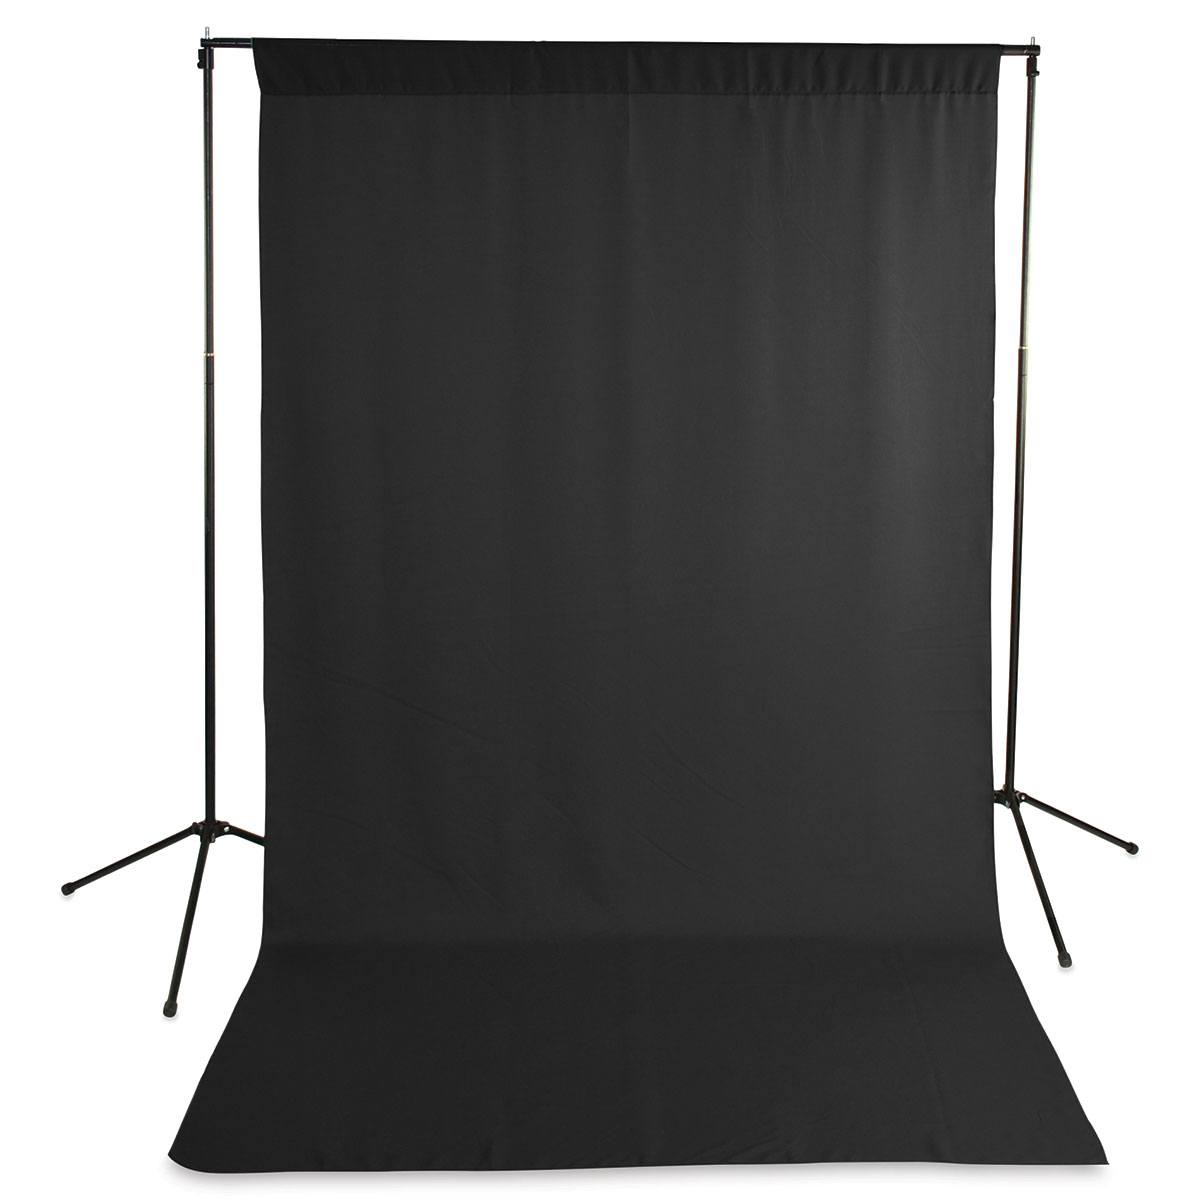 Savage Wrinkle-Resistant Economy Solid Background Kit - Black, 5 ft x 9 ft